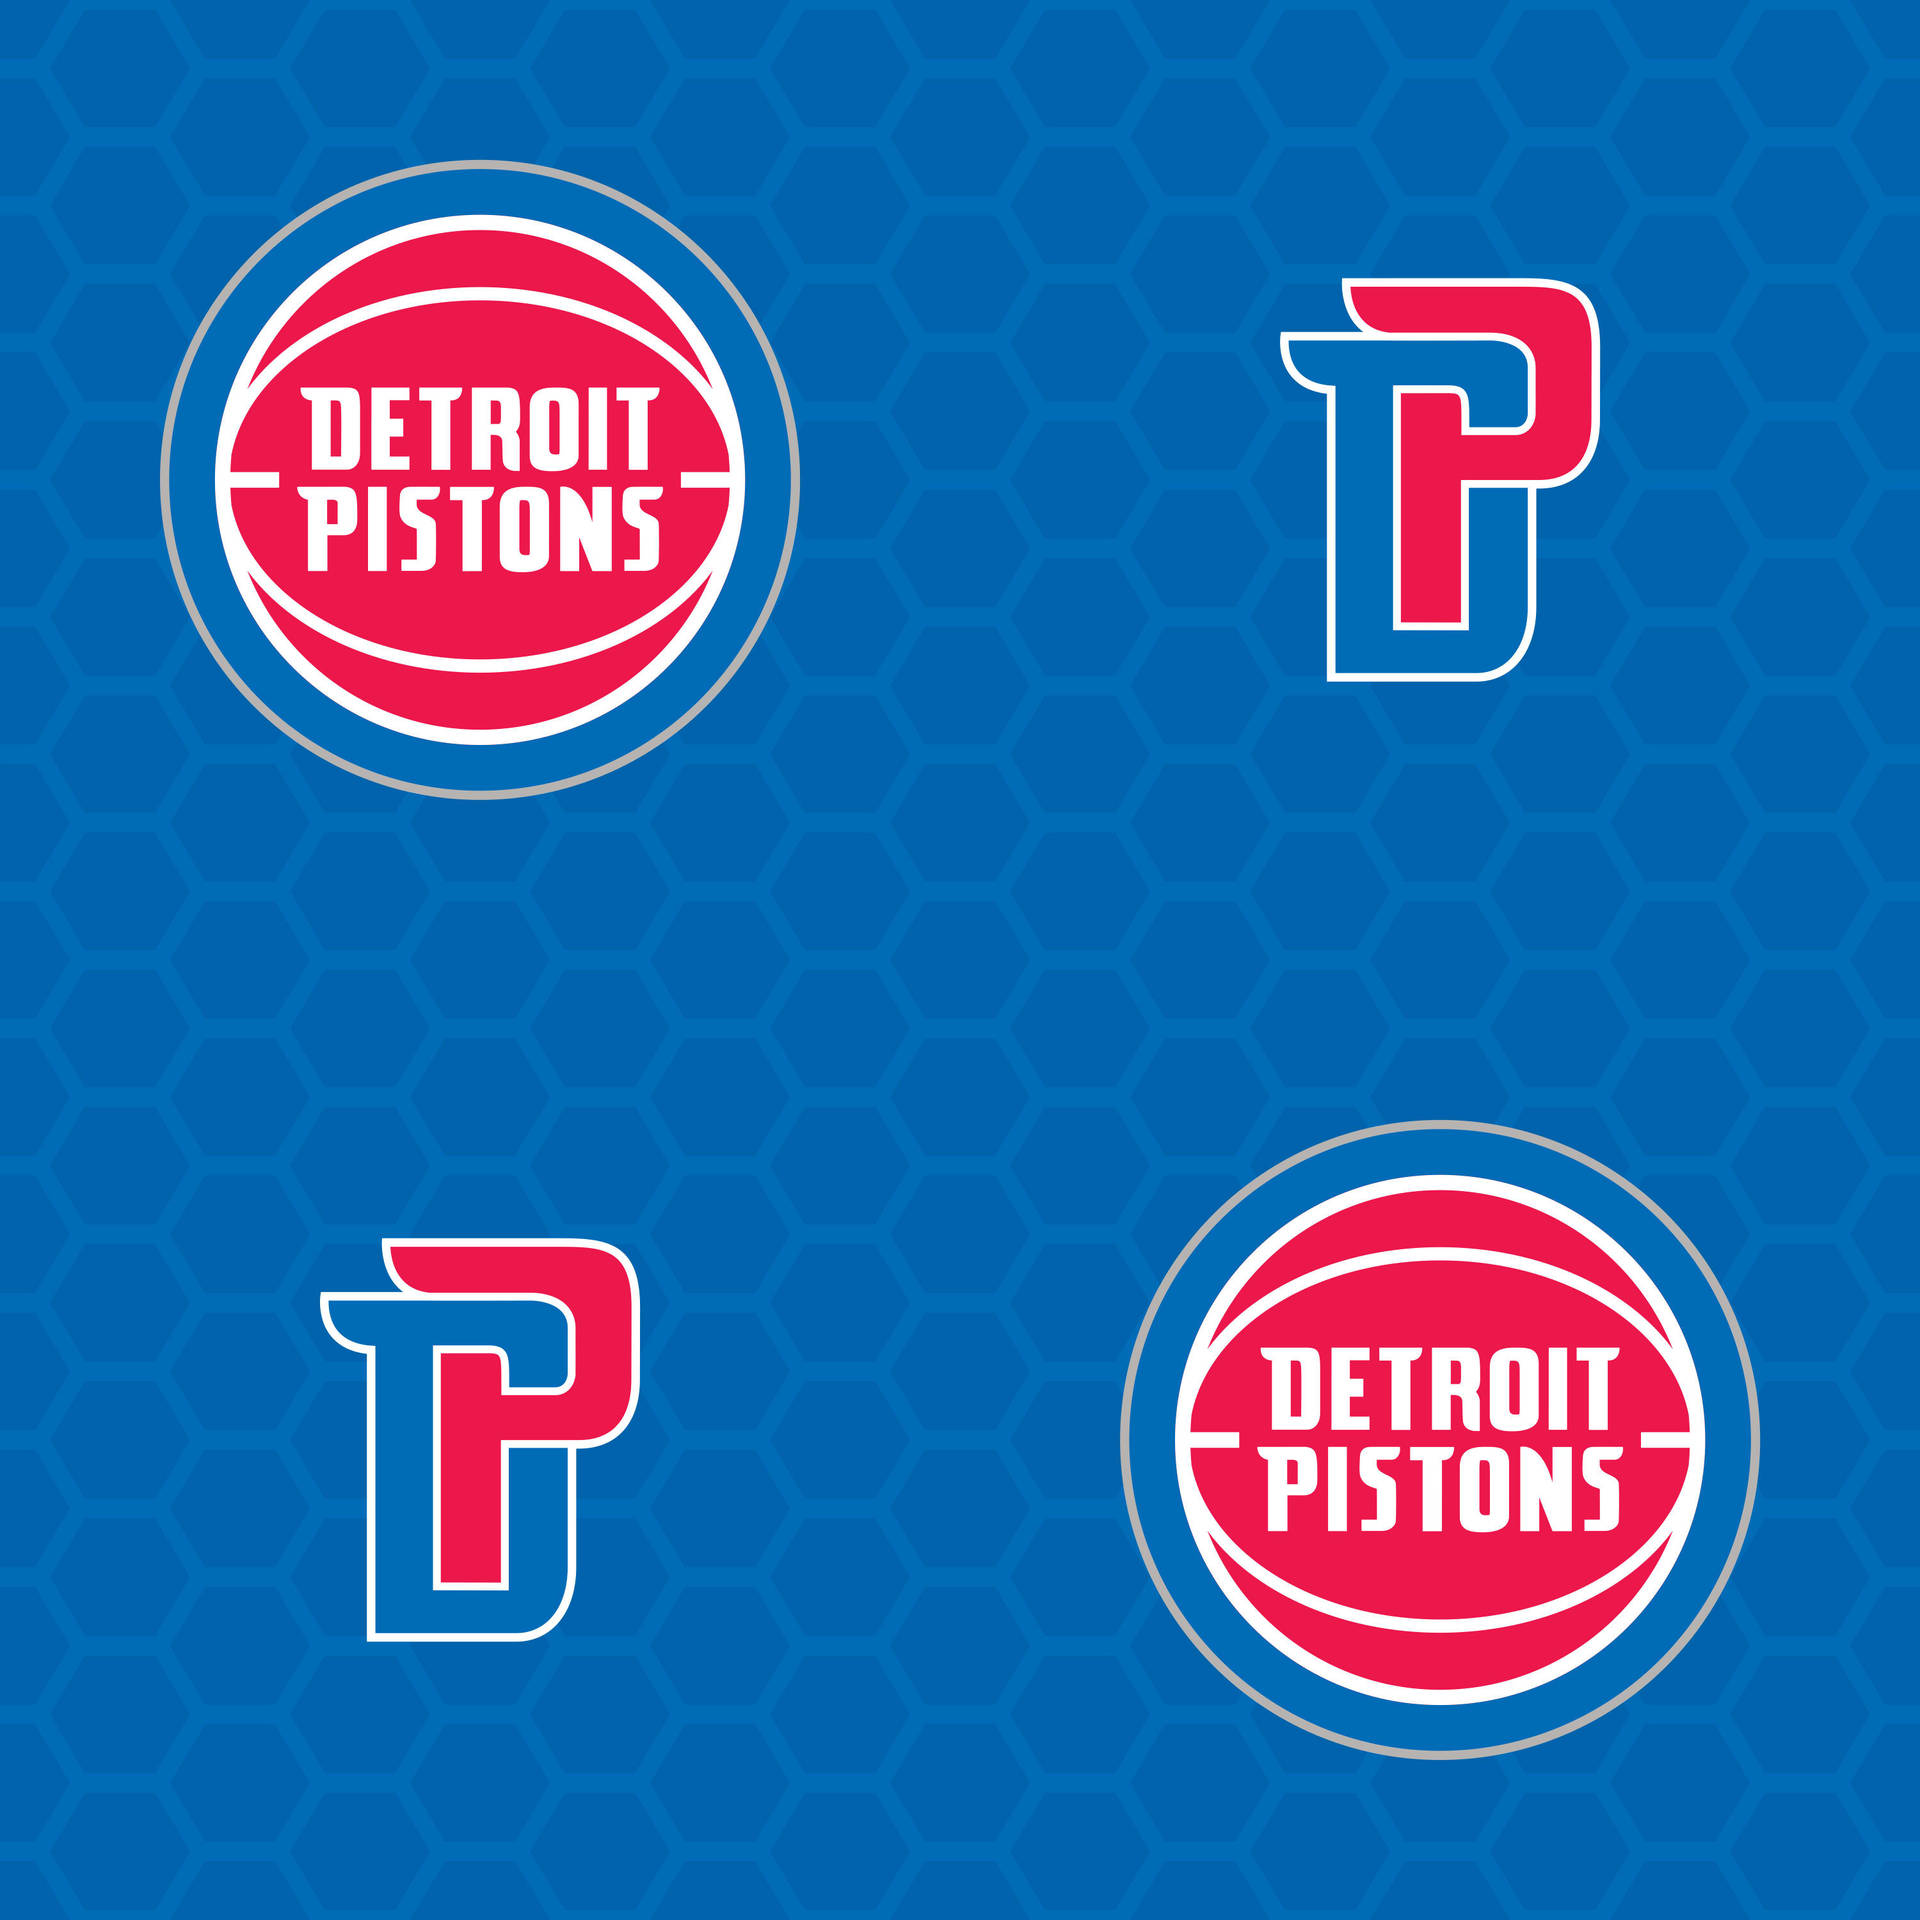 Detroit Pistons In Action On Court Wallpaper